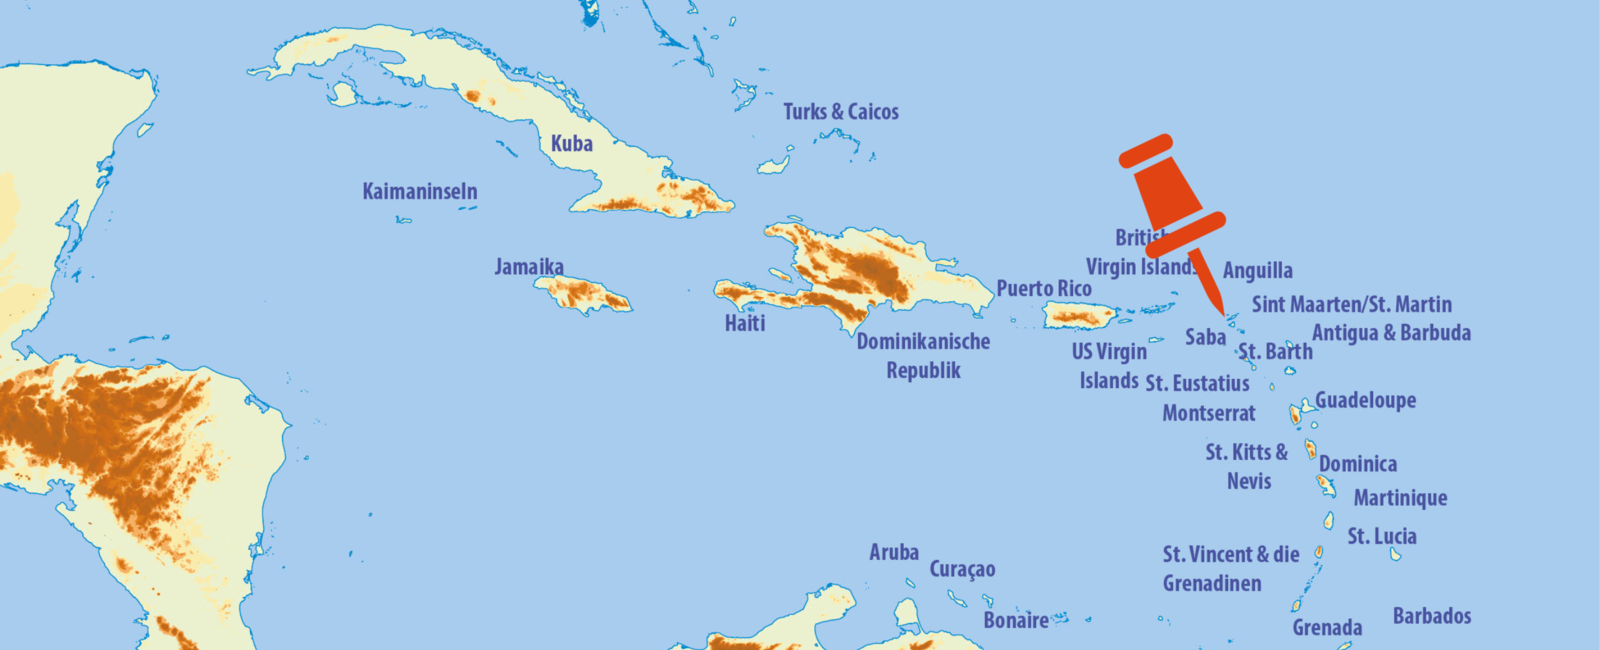 NEWS
 Unentdecktes Kuba - Archipielago de los Canarreos 
